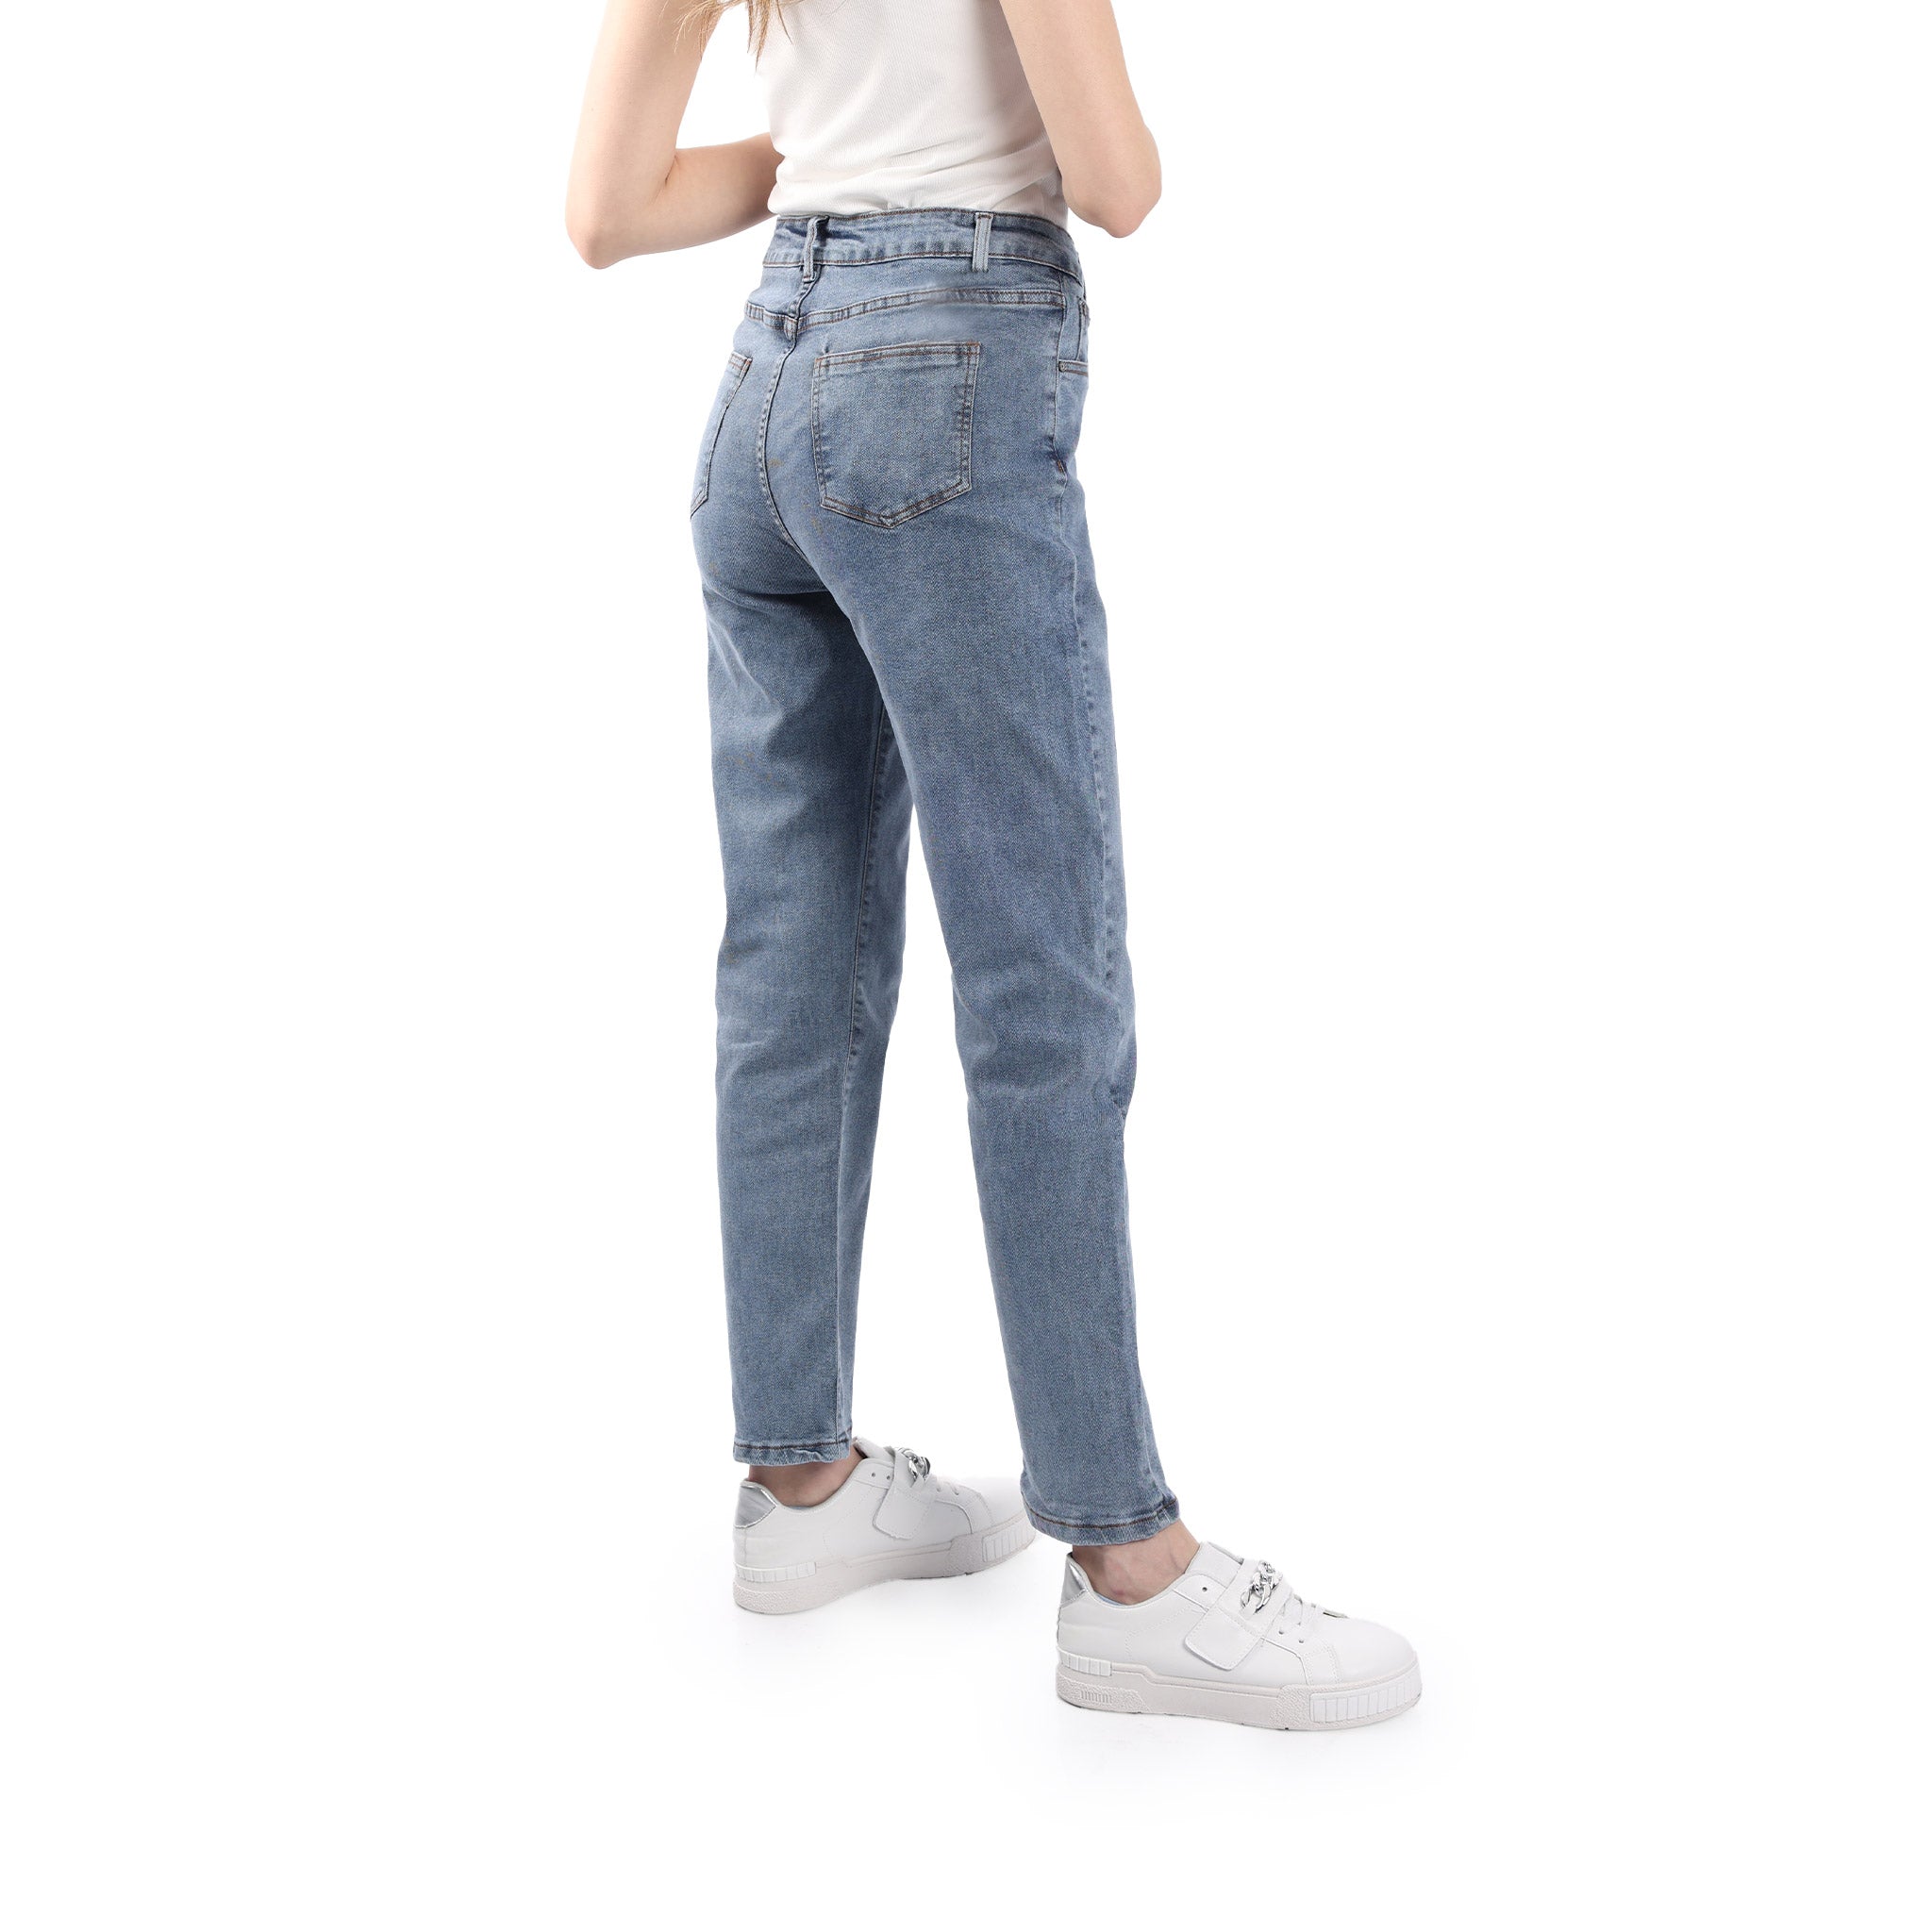 Boyfriend Jeans Pants